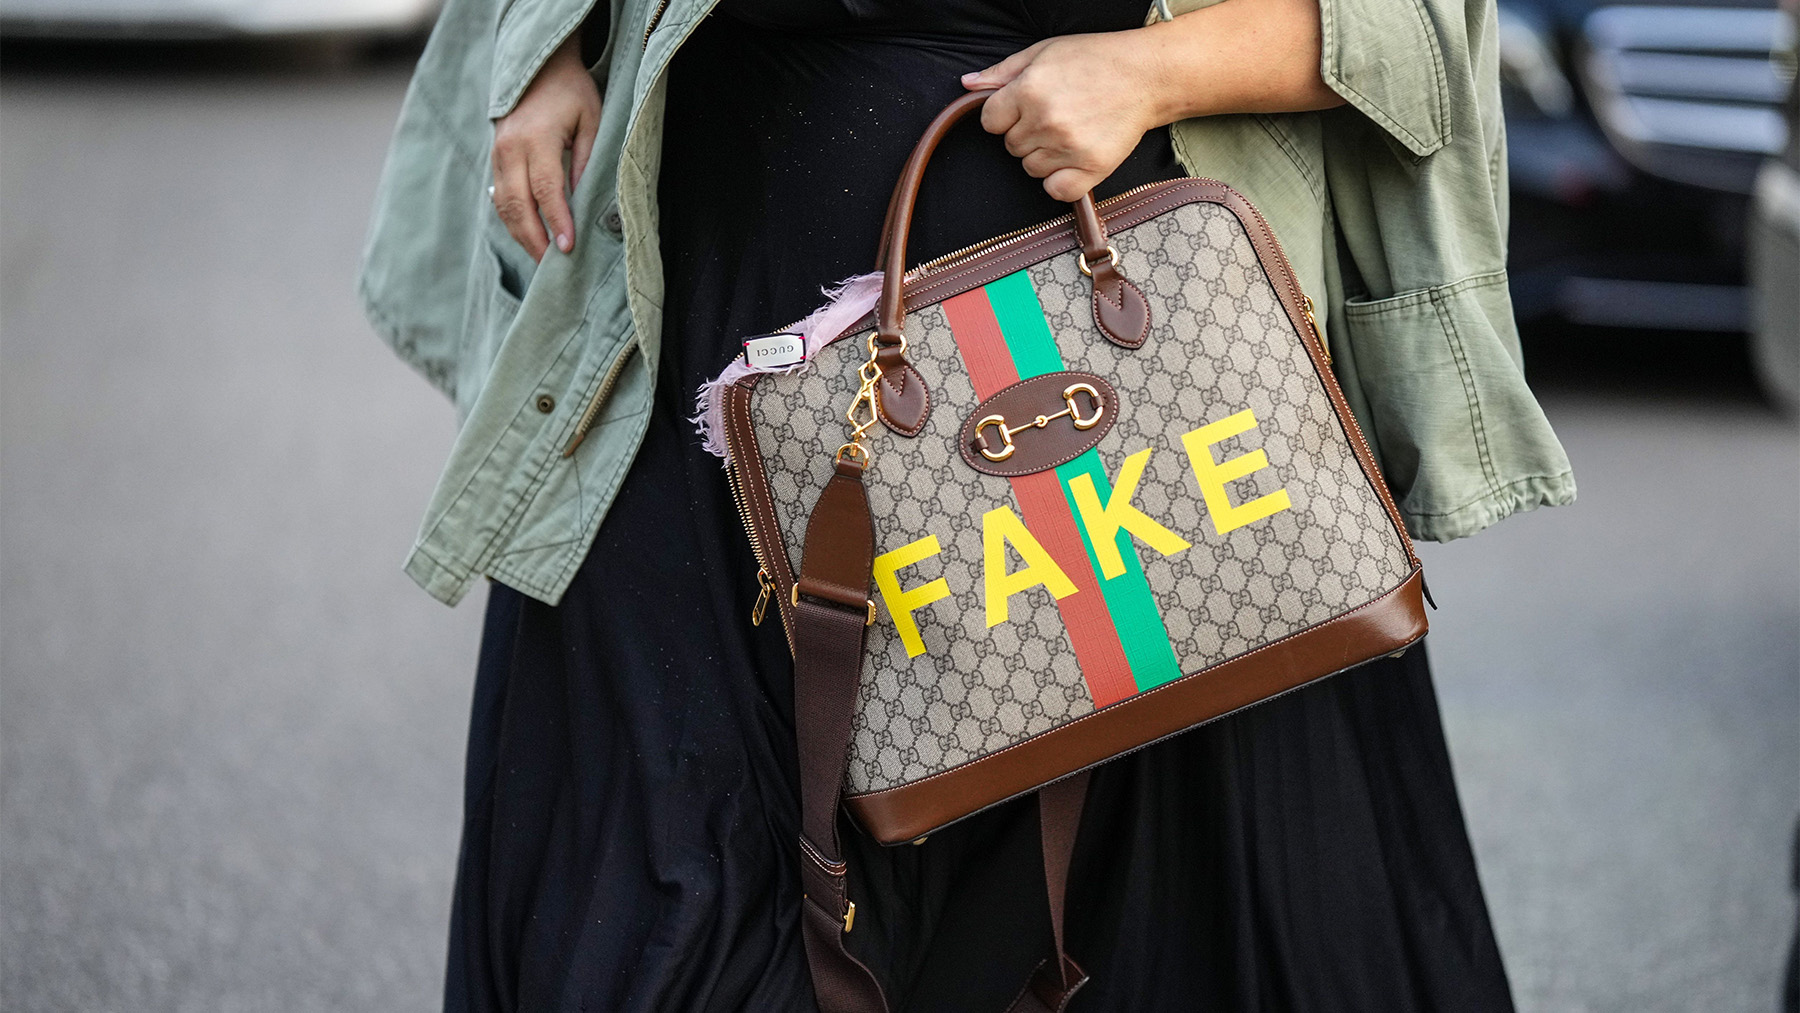 Entrupy Identifies Fake Luxury Handbags Using AI